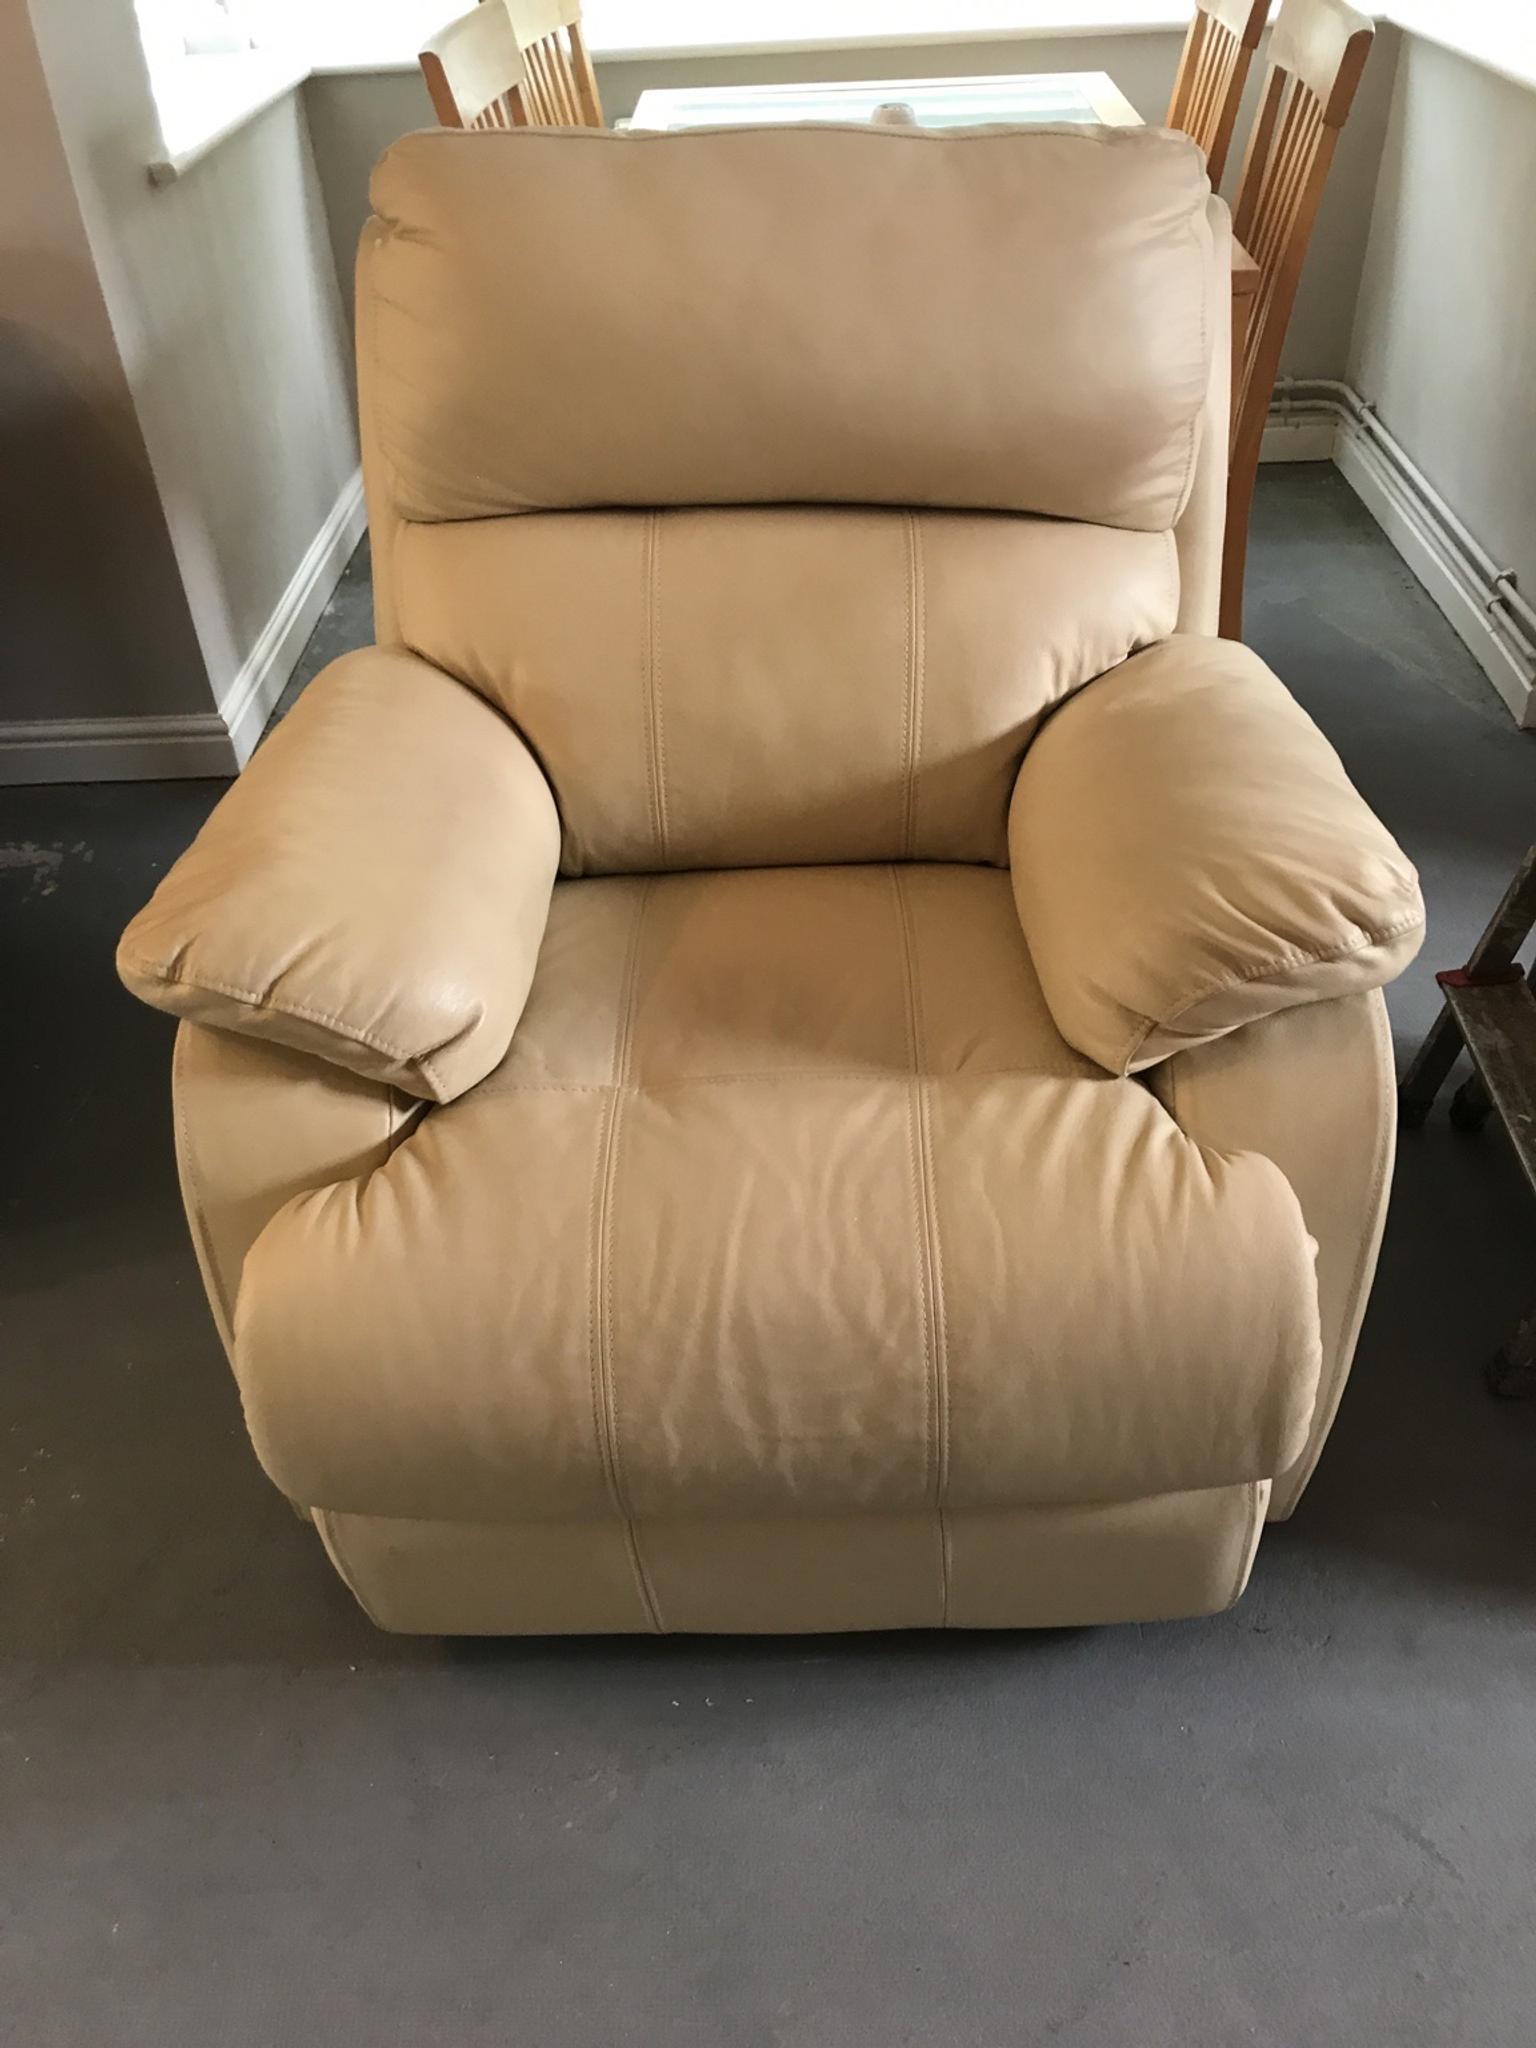 Cream Leather Armchair In Sk9, Cream Leather Armchair